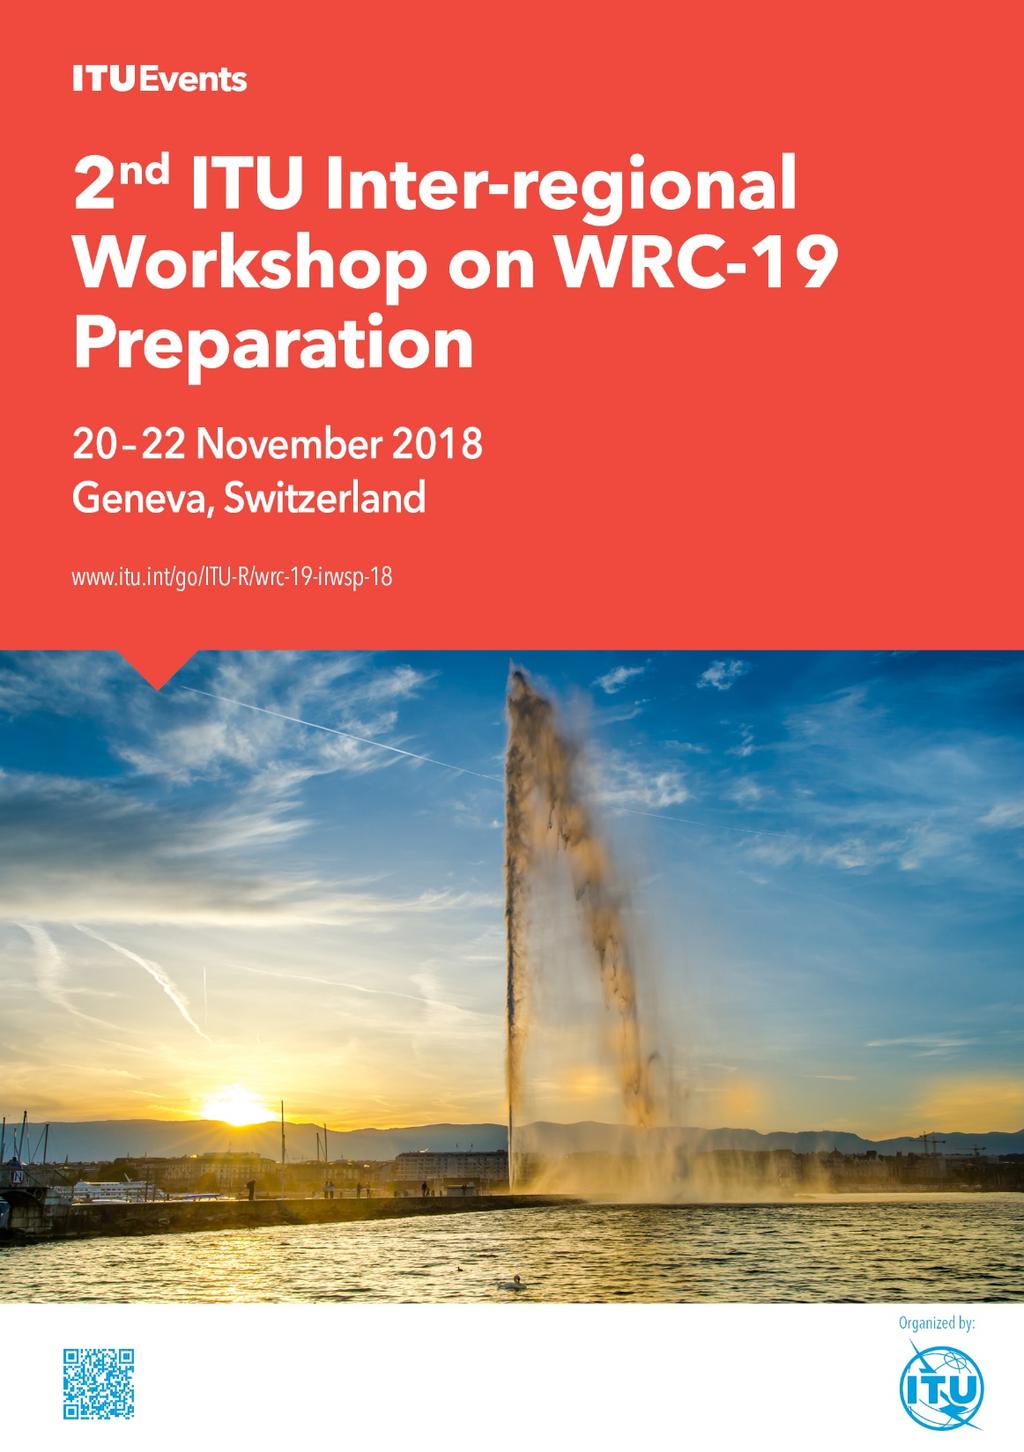 WRC-19 PREPARATION (Geneva, 20-22 November 2018)